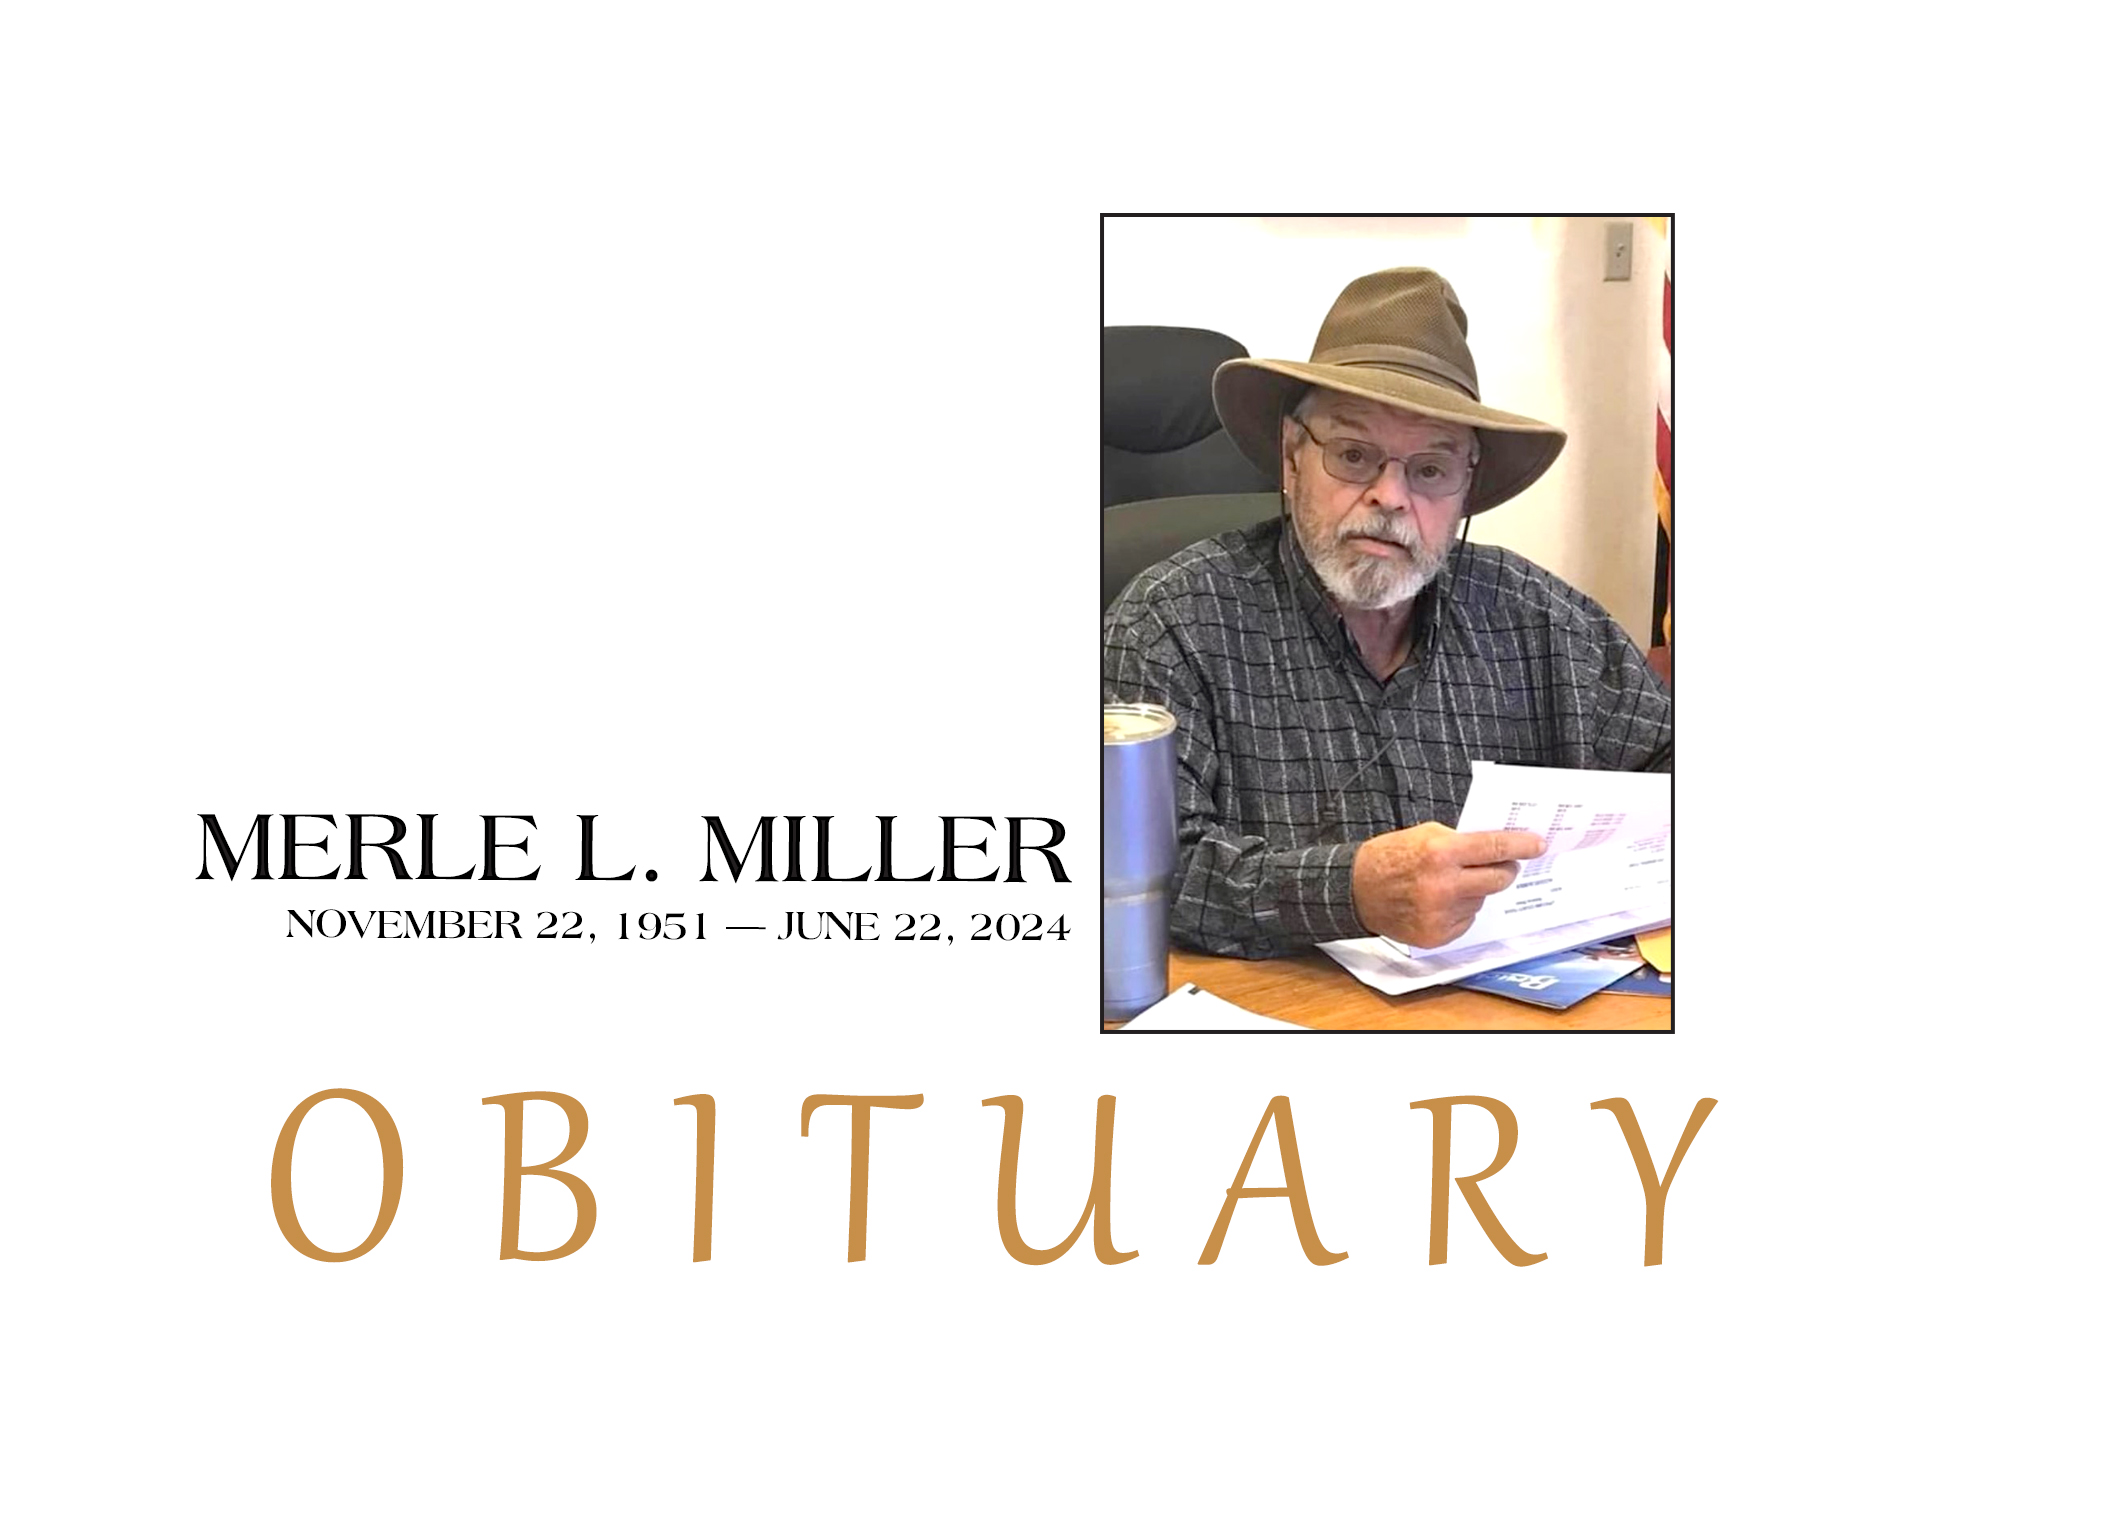 OBITUARY: Merle L. Miller